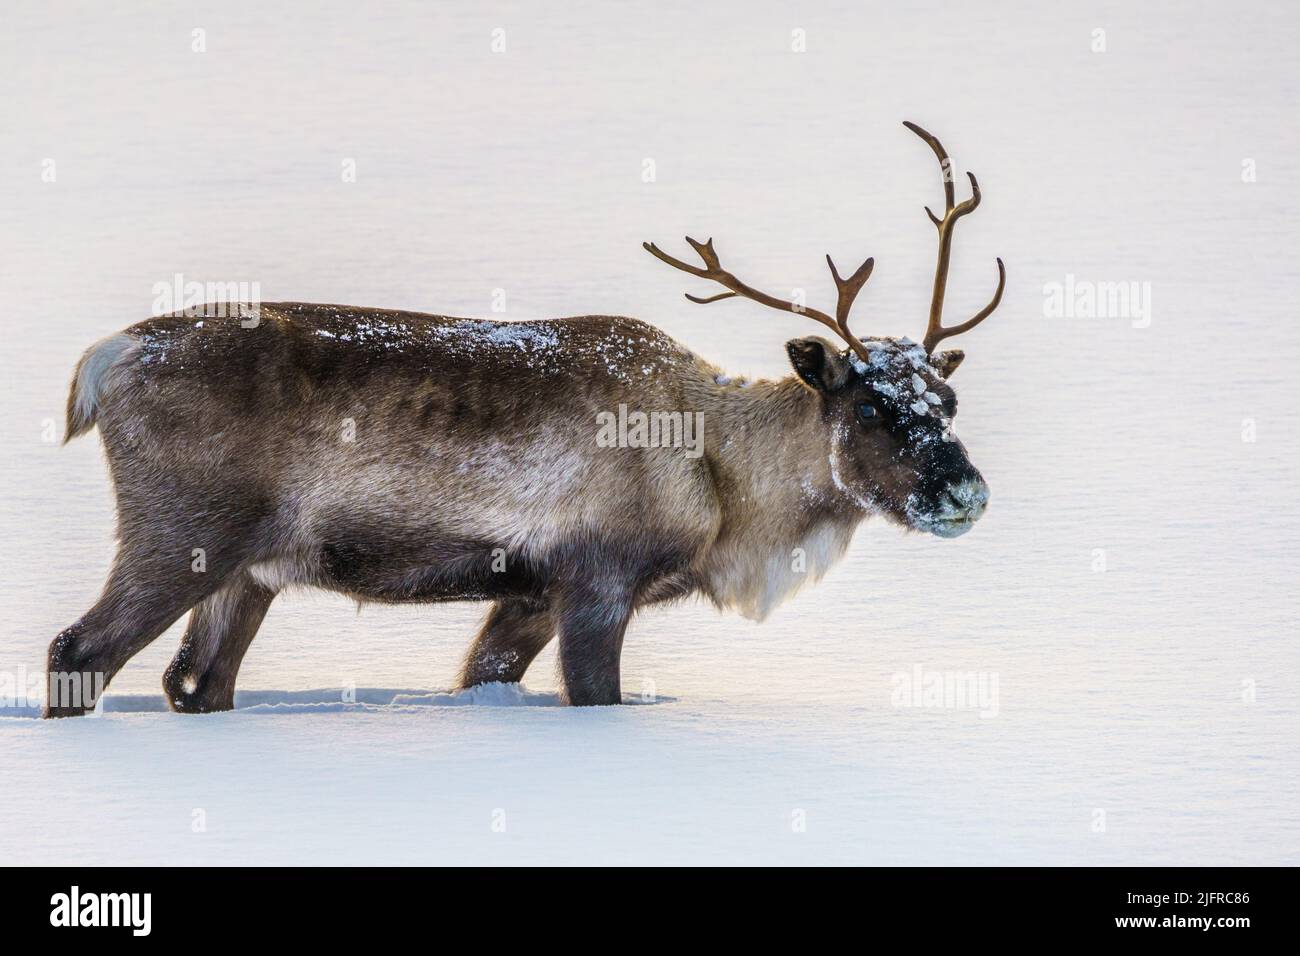 Reindeer, Rangifer tarandus, walking in deep snow, Kvikkjokk, Swedish Lapland, Sweden Stock Photo